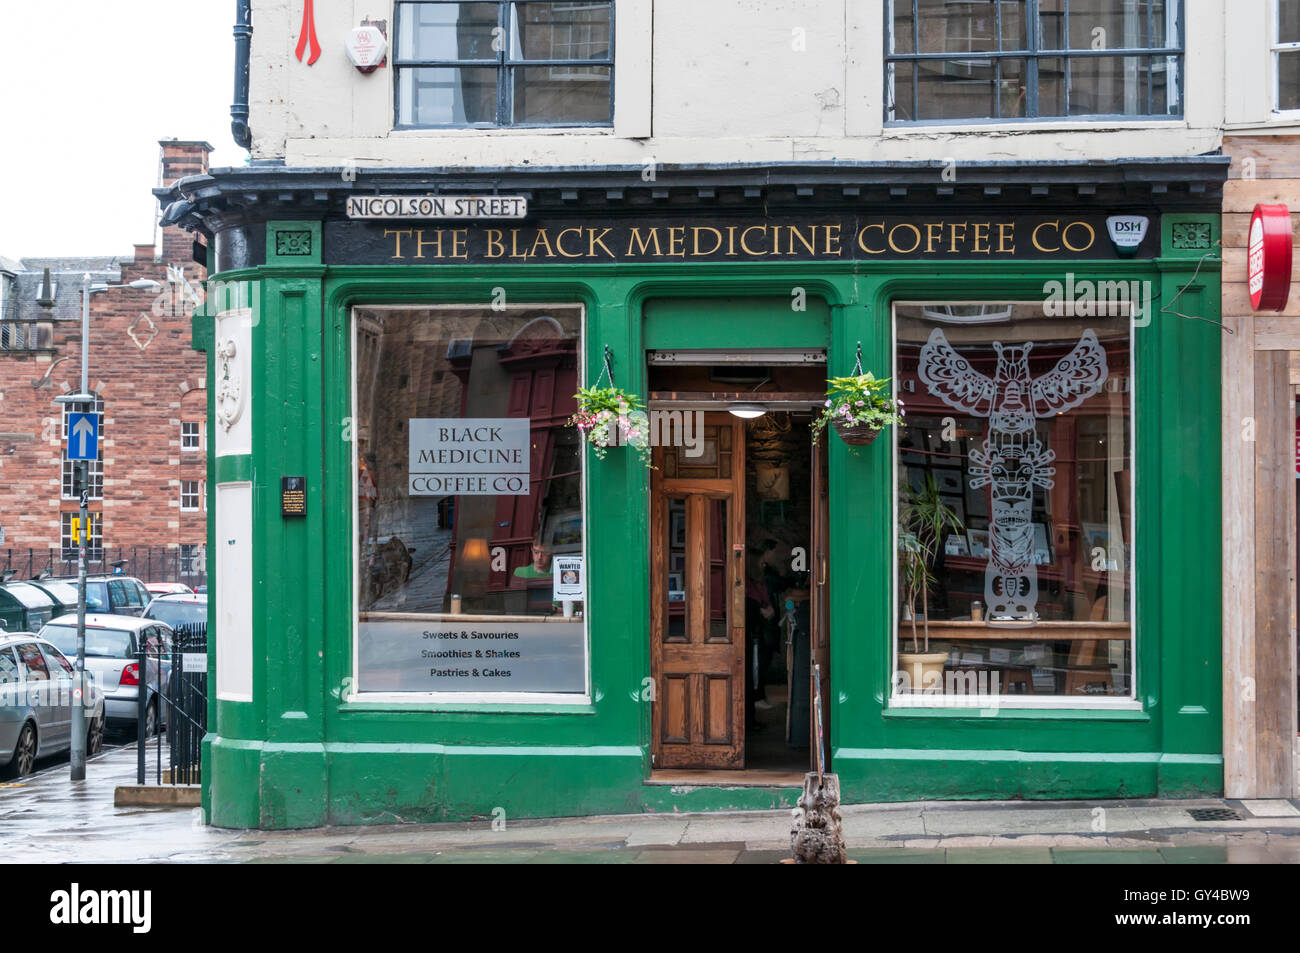 Der schwarze Medizin Kaffee Co in Nicolson Street, Edinburgh.  Wo J. K. Rowling schrieb einige frühe Teile der Harry Potter Bücher. Stockfoto